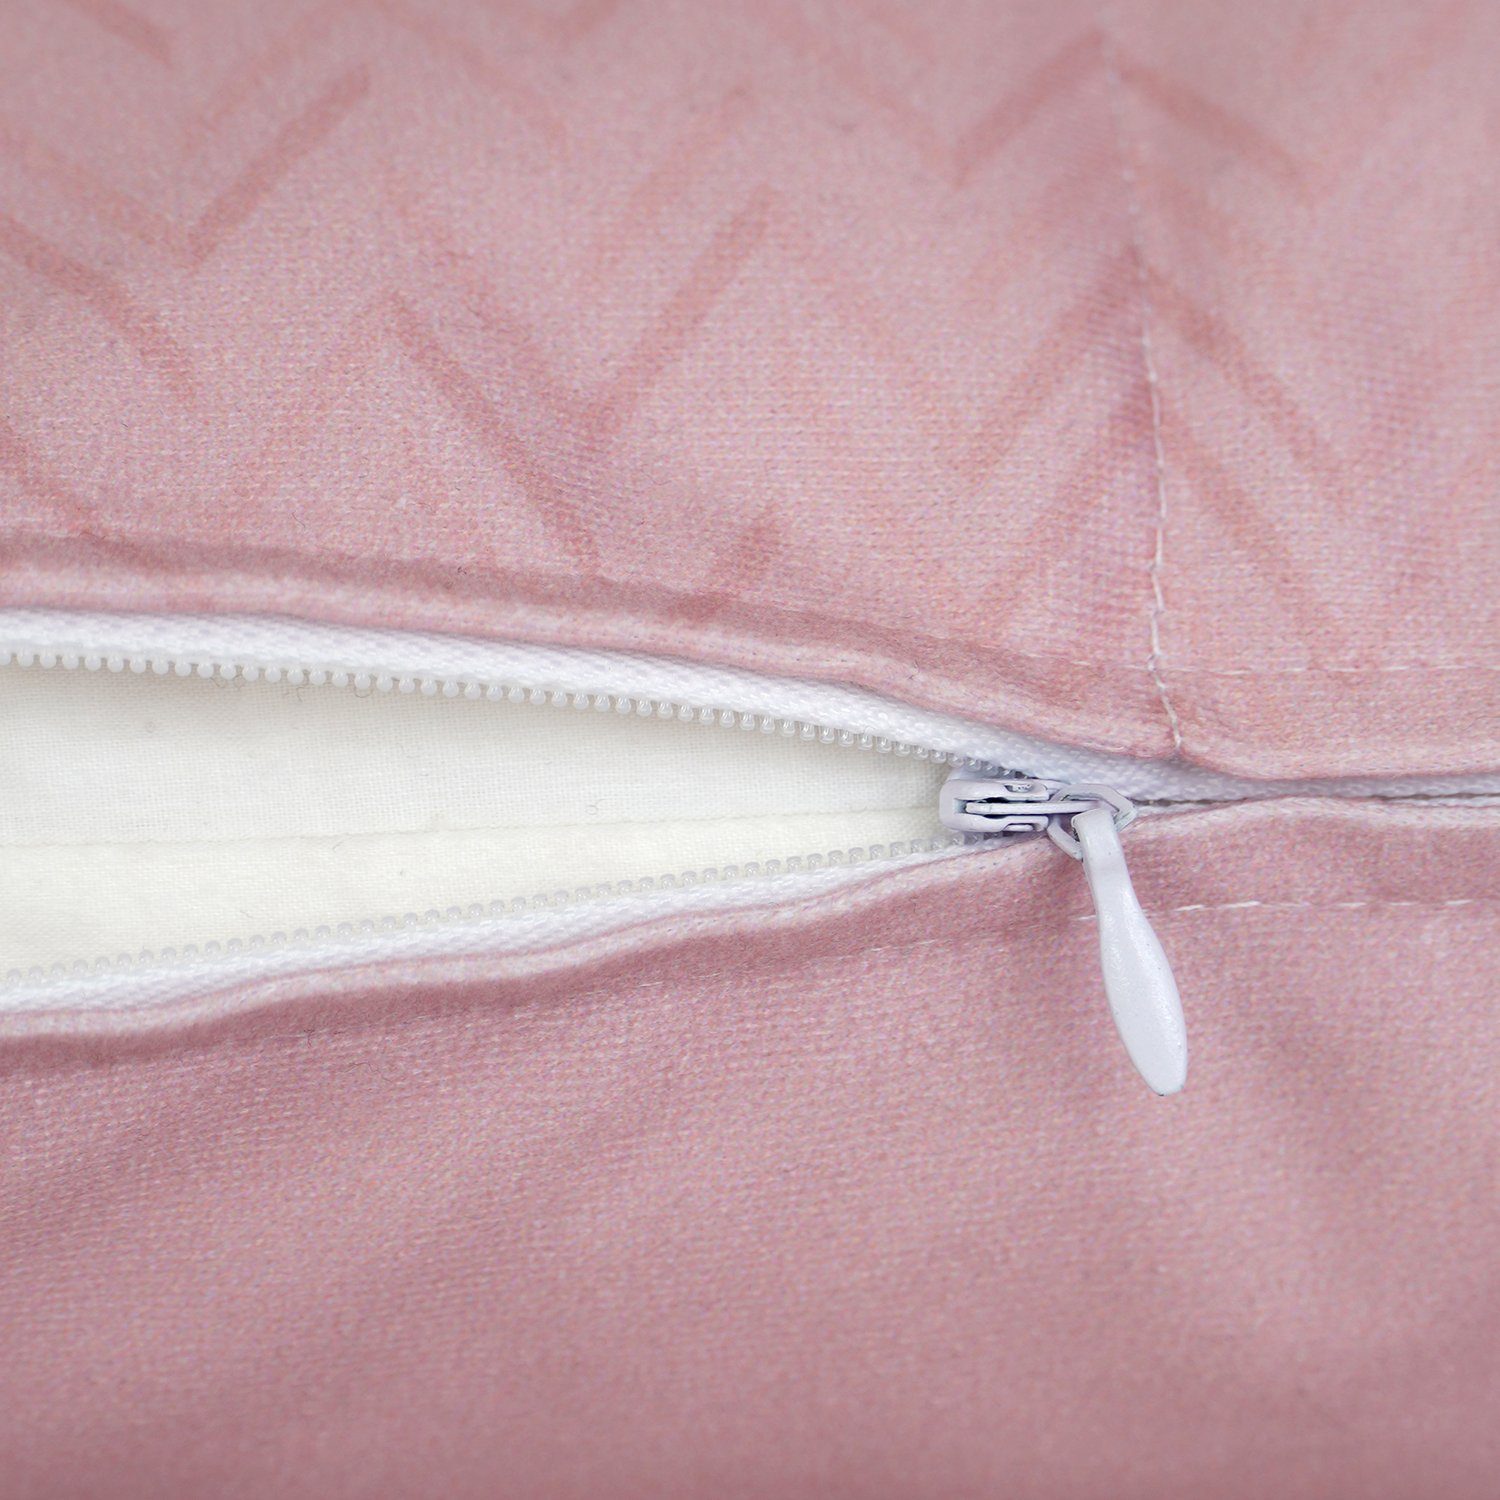 Kissenbezug Bunt - Marmoroptik 40x40cm Kissenhülle (1 - Türkis/Pink Zierkissenbezug, - mit - Stück), queence Reißverschluss